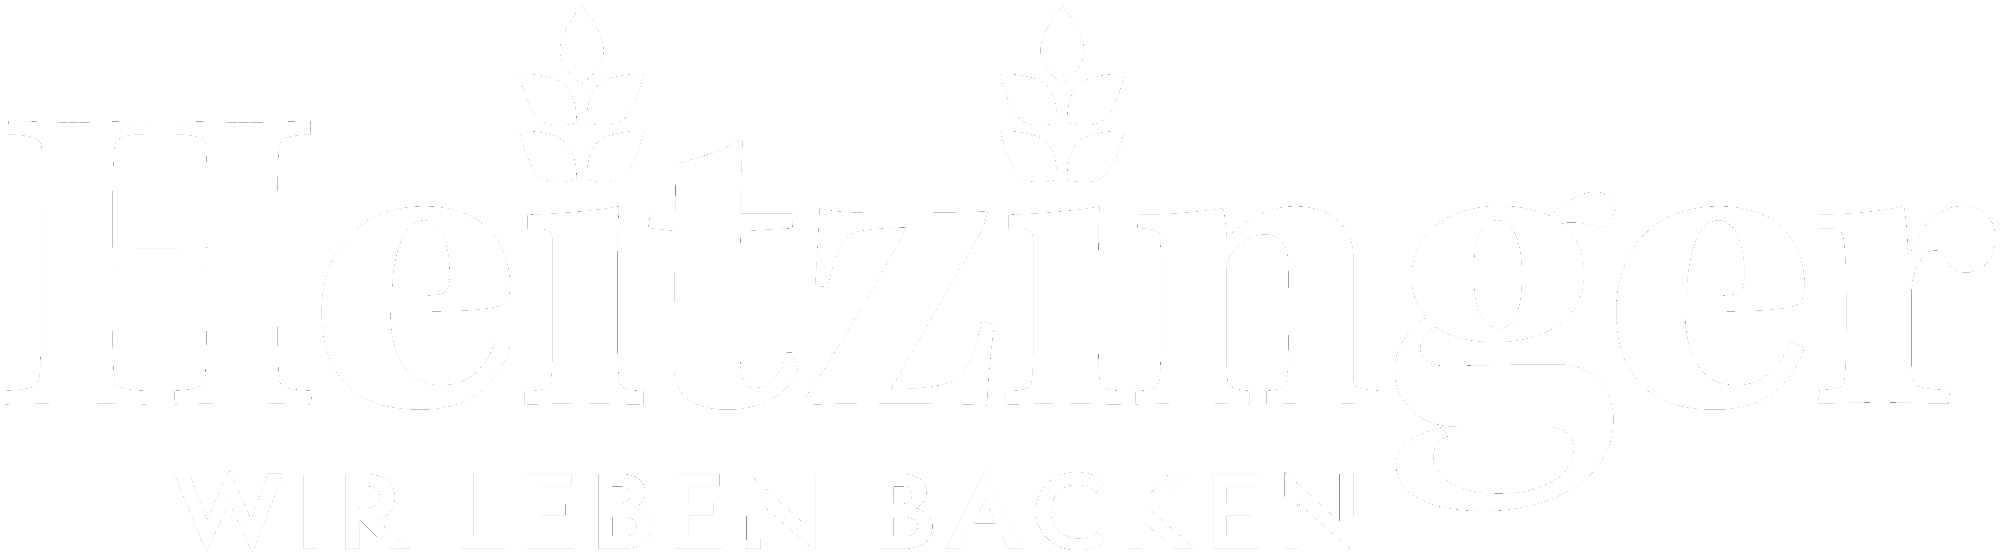 Heitzinger Bäckerei Logo